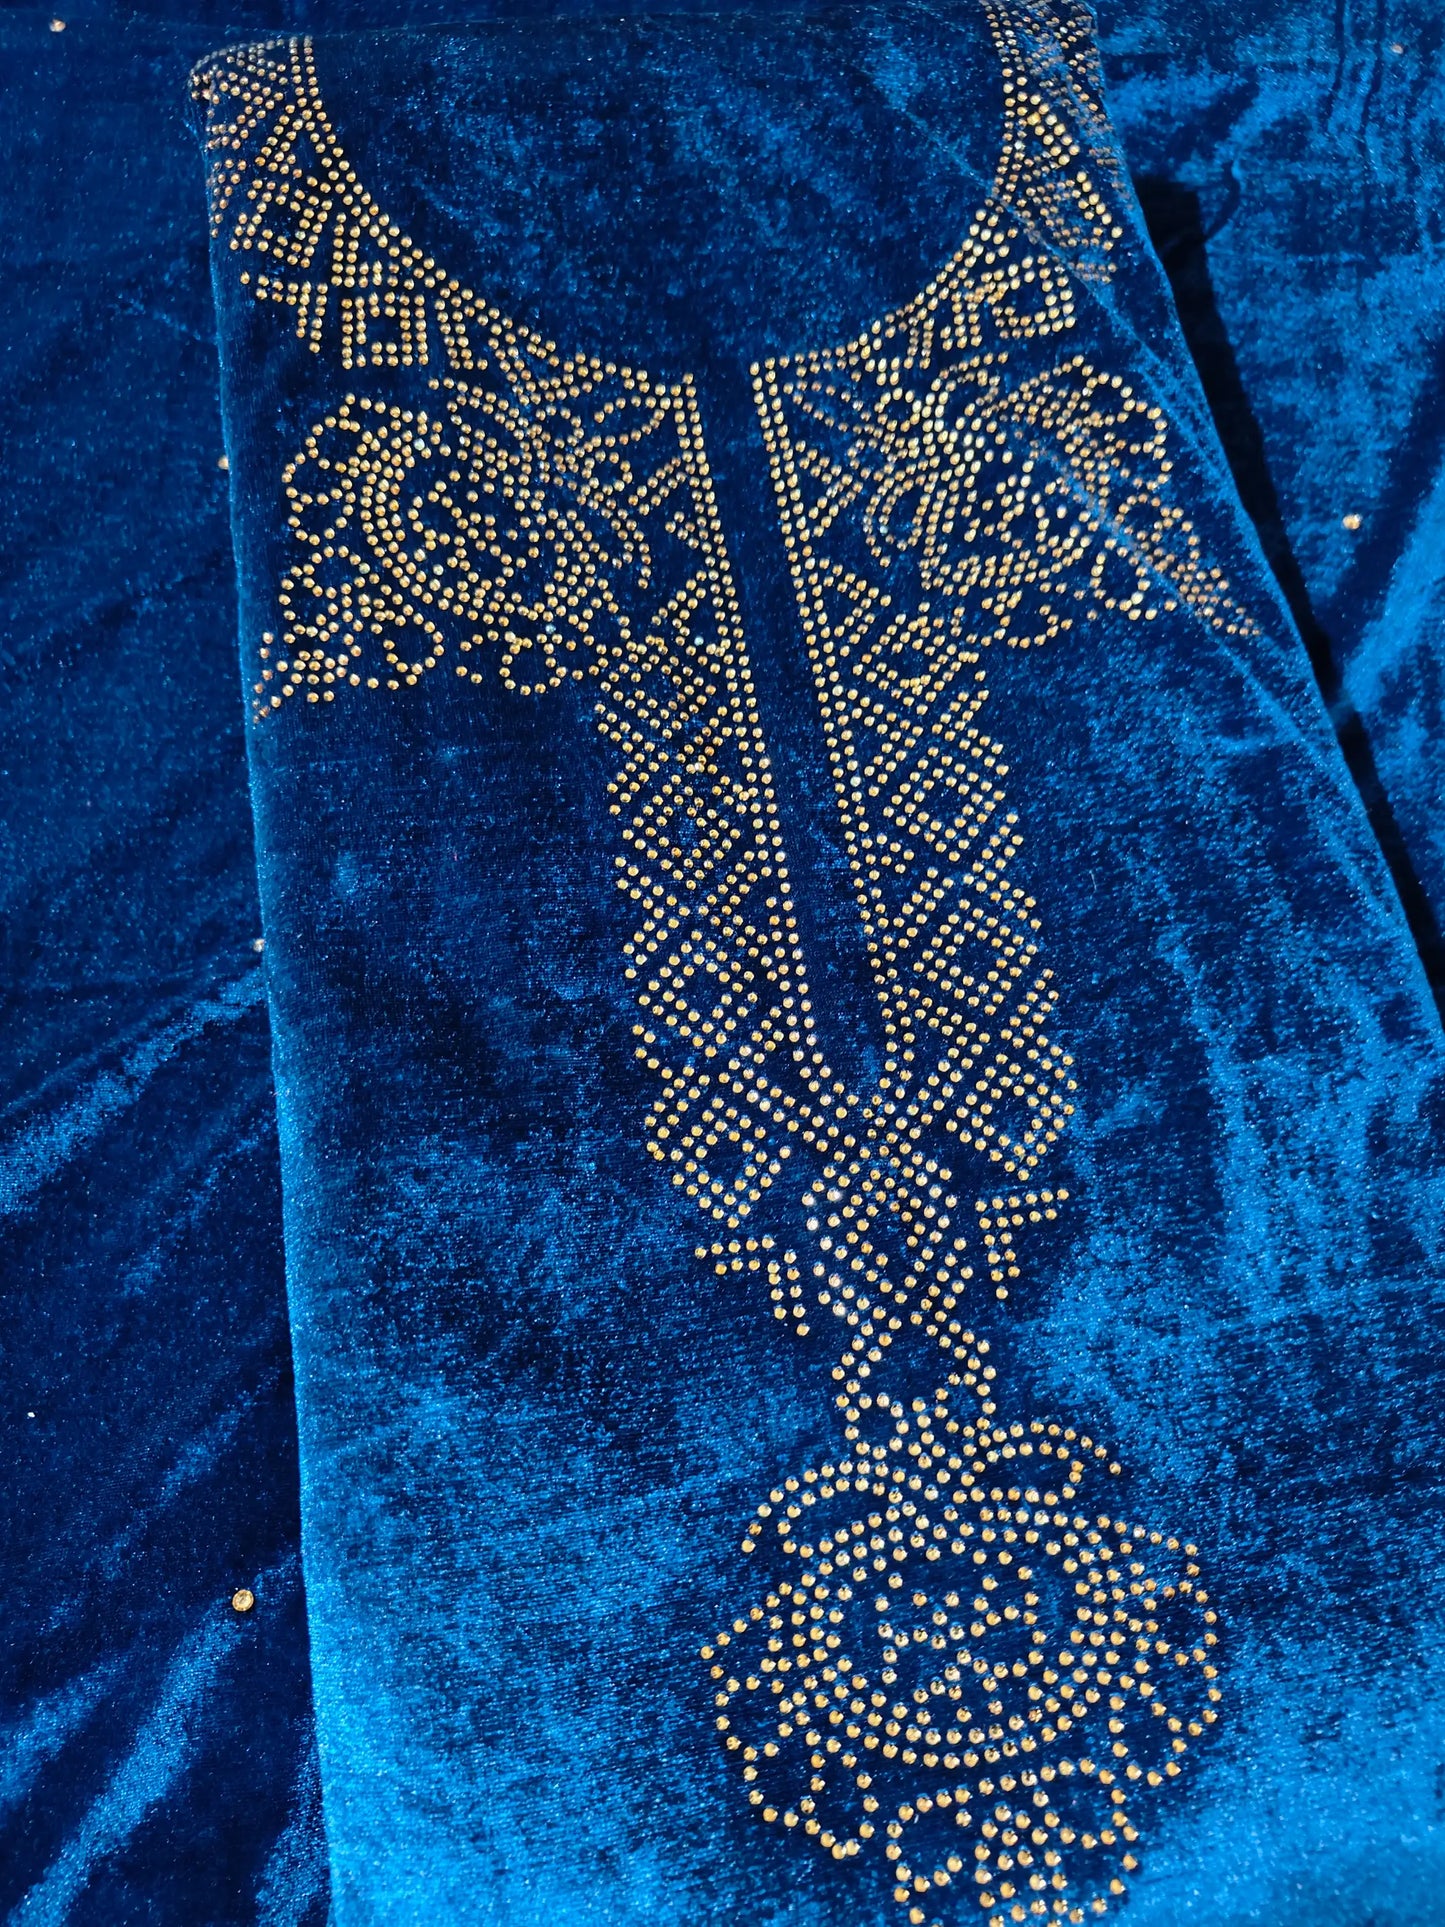 Velvet Dress Material (Unstitched Salwar Suit) - BBQSTYLE